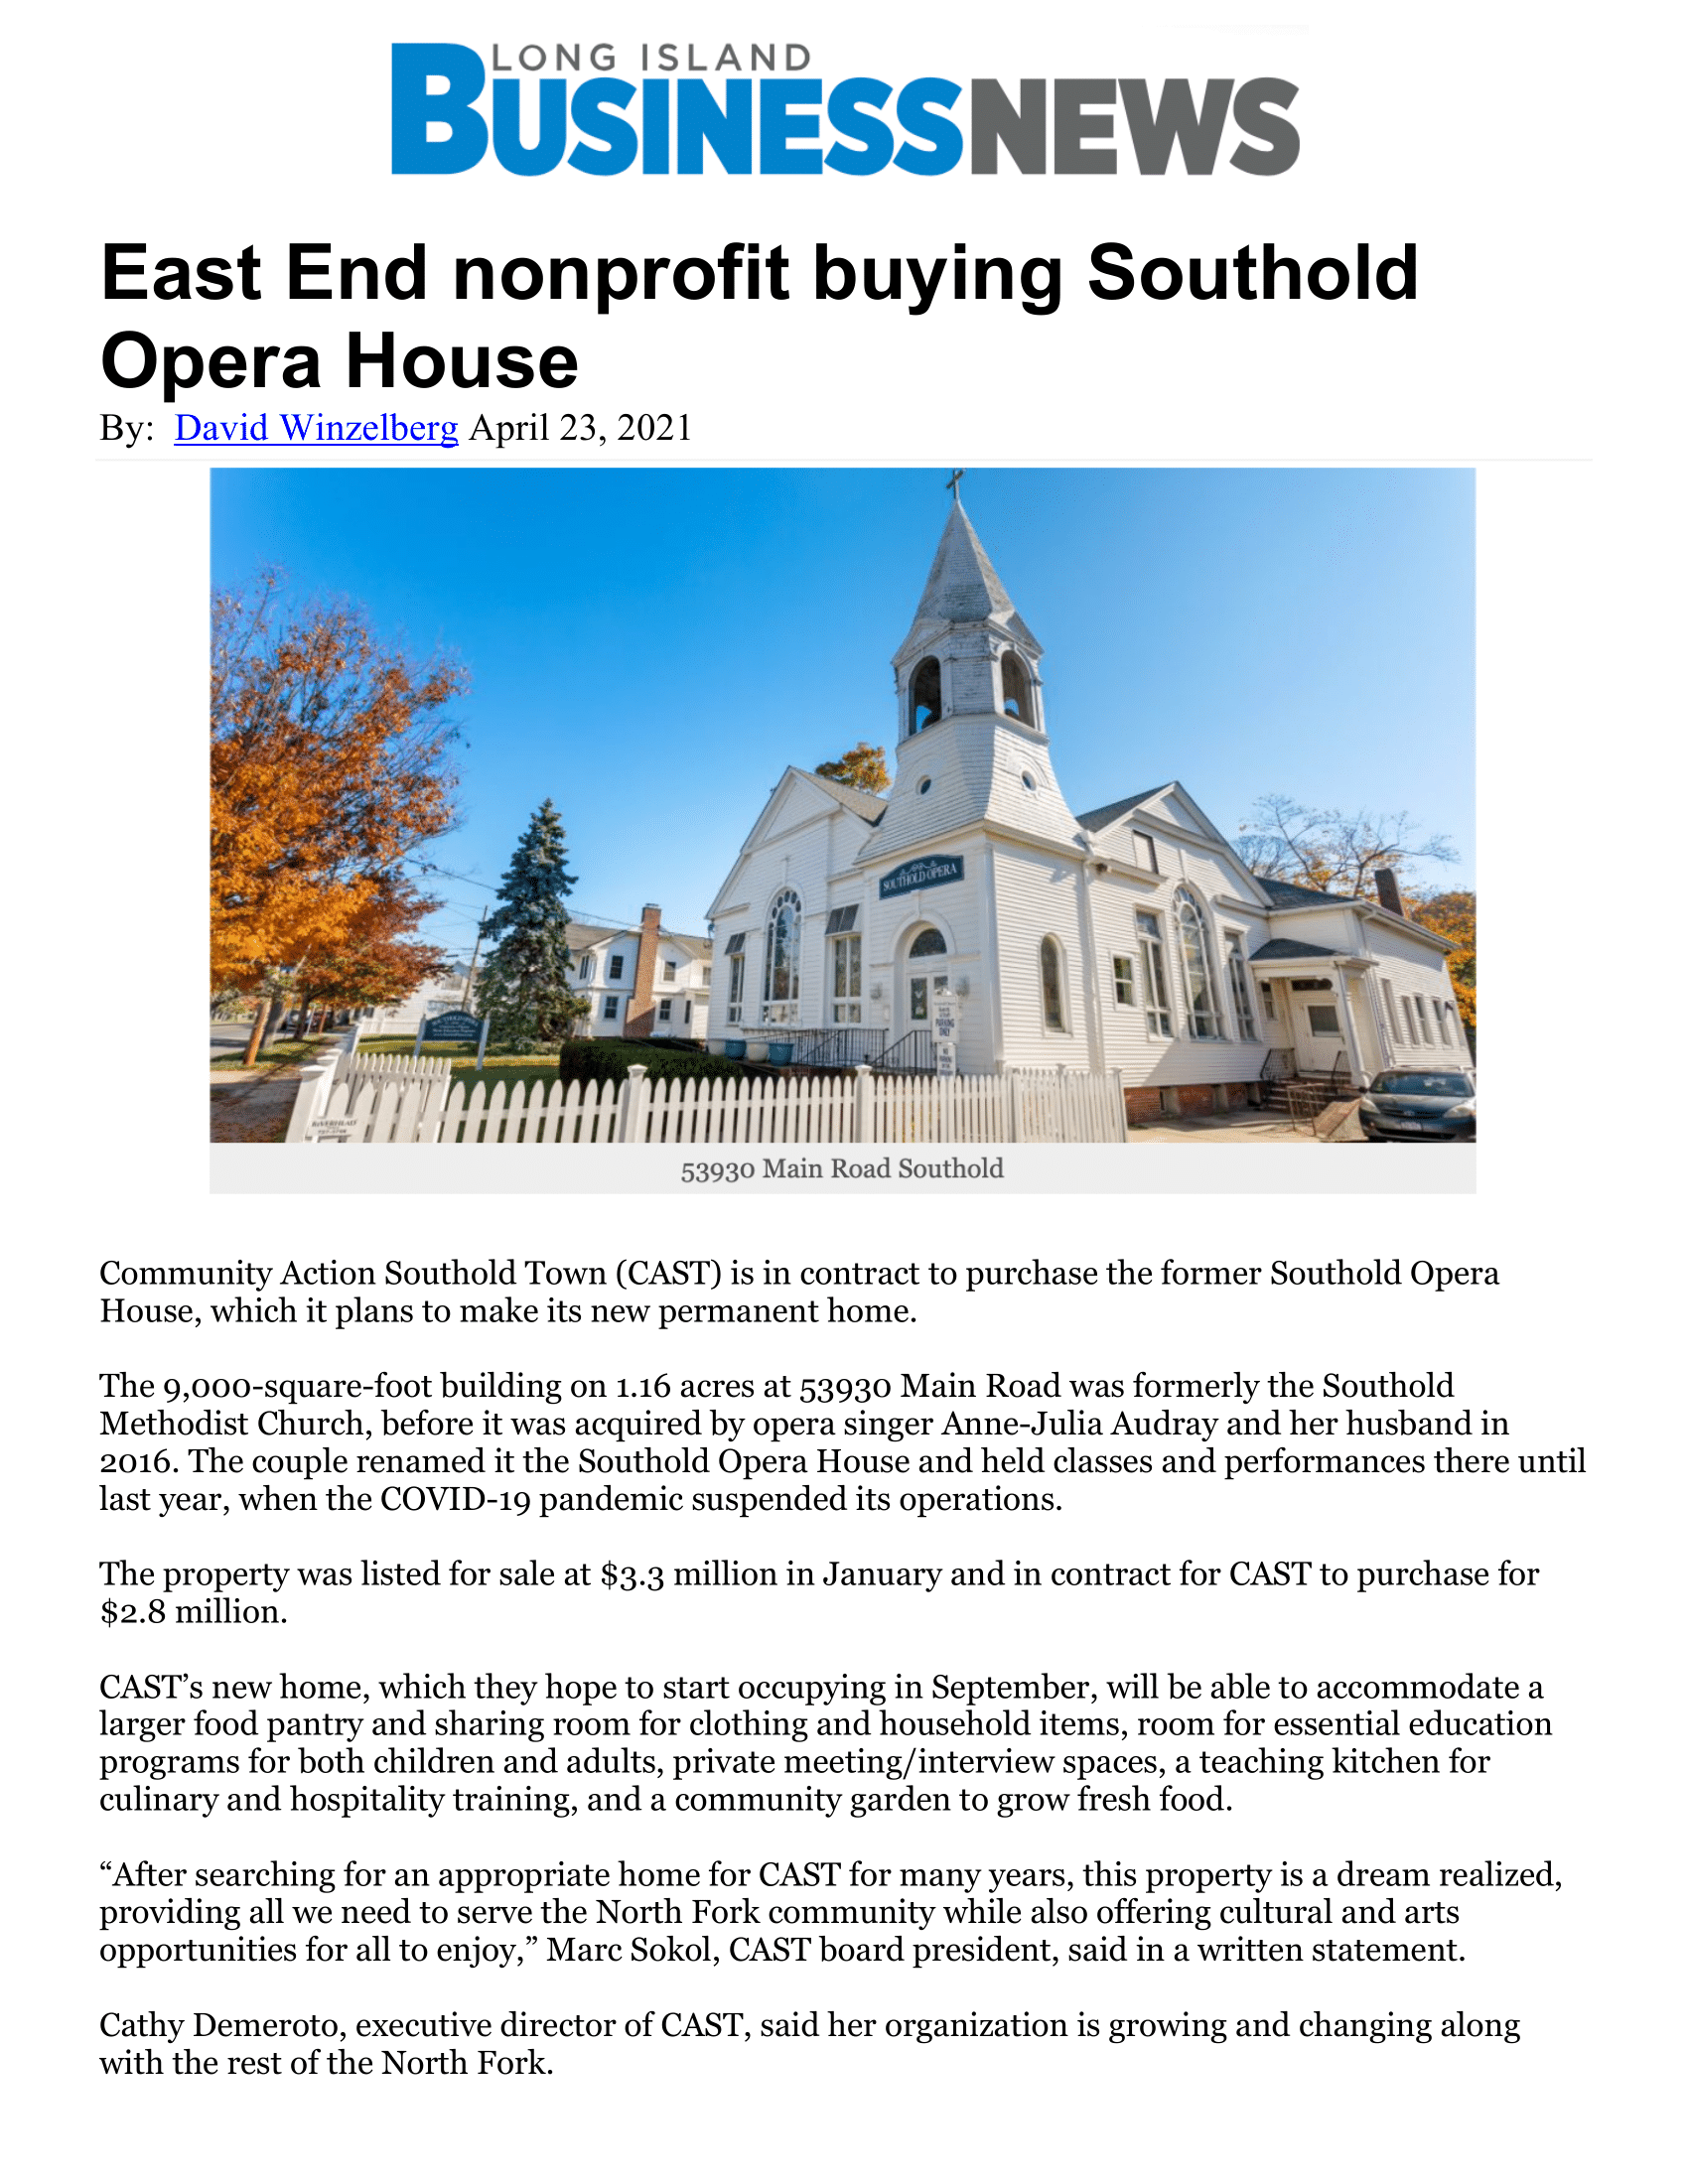 LIBN – East End nonprofit buying Southold Opera House